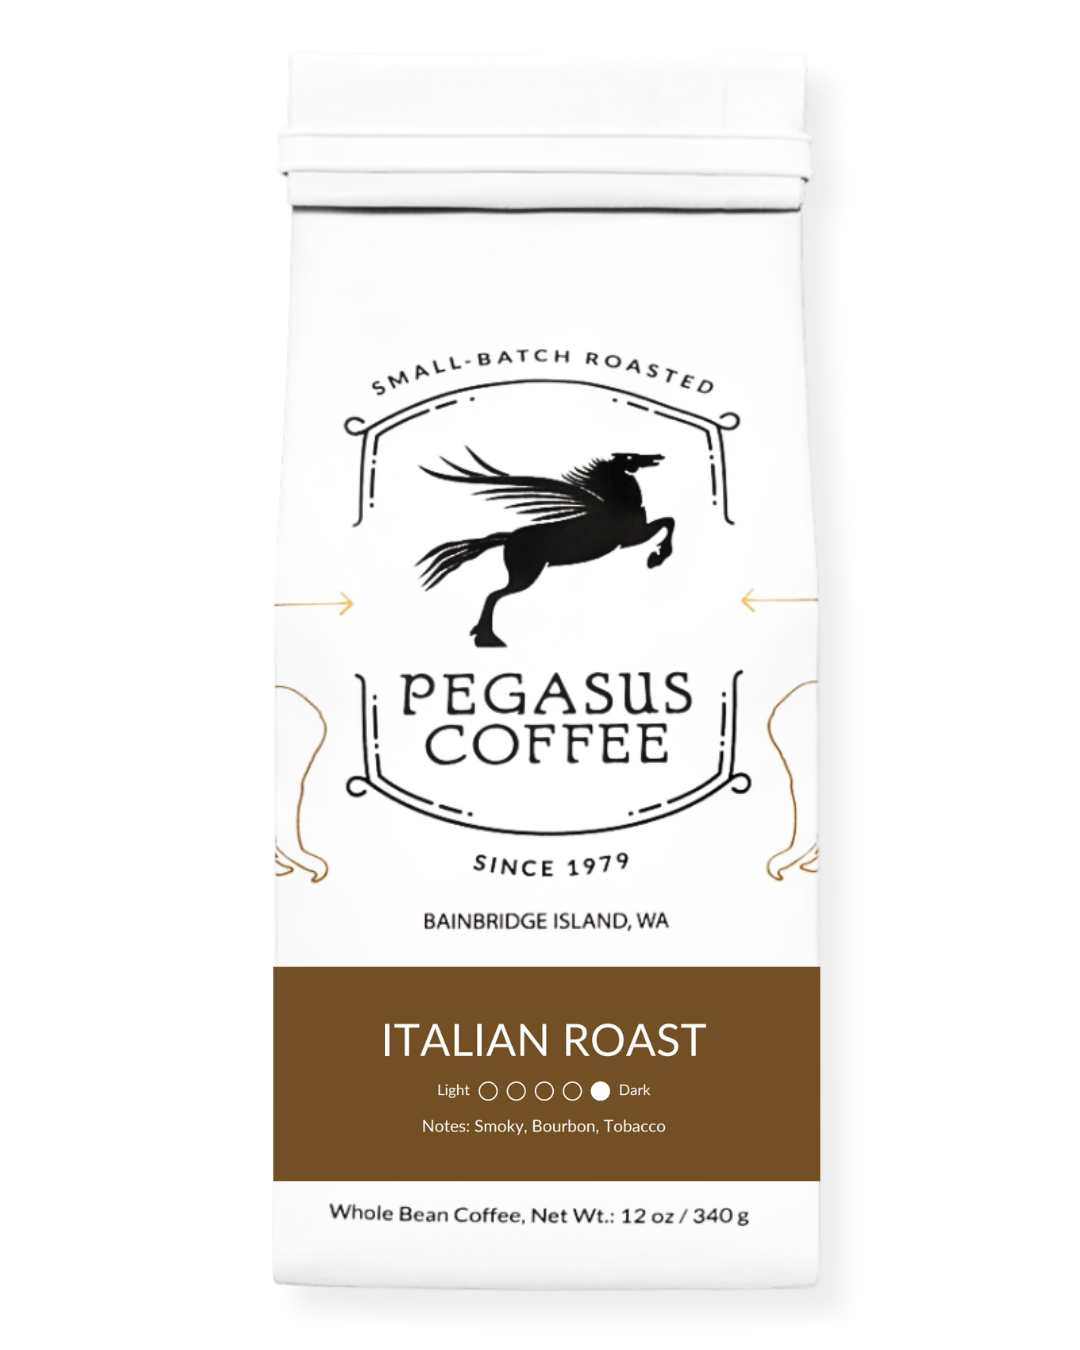 Italian Roast Coffee From Pegasus Coffee